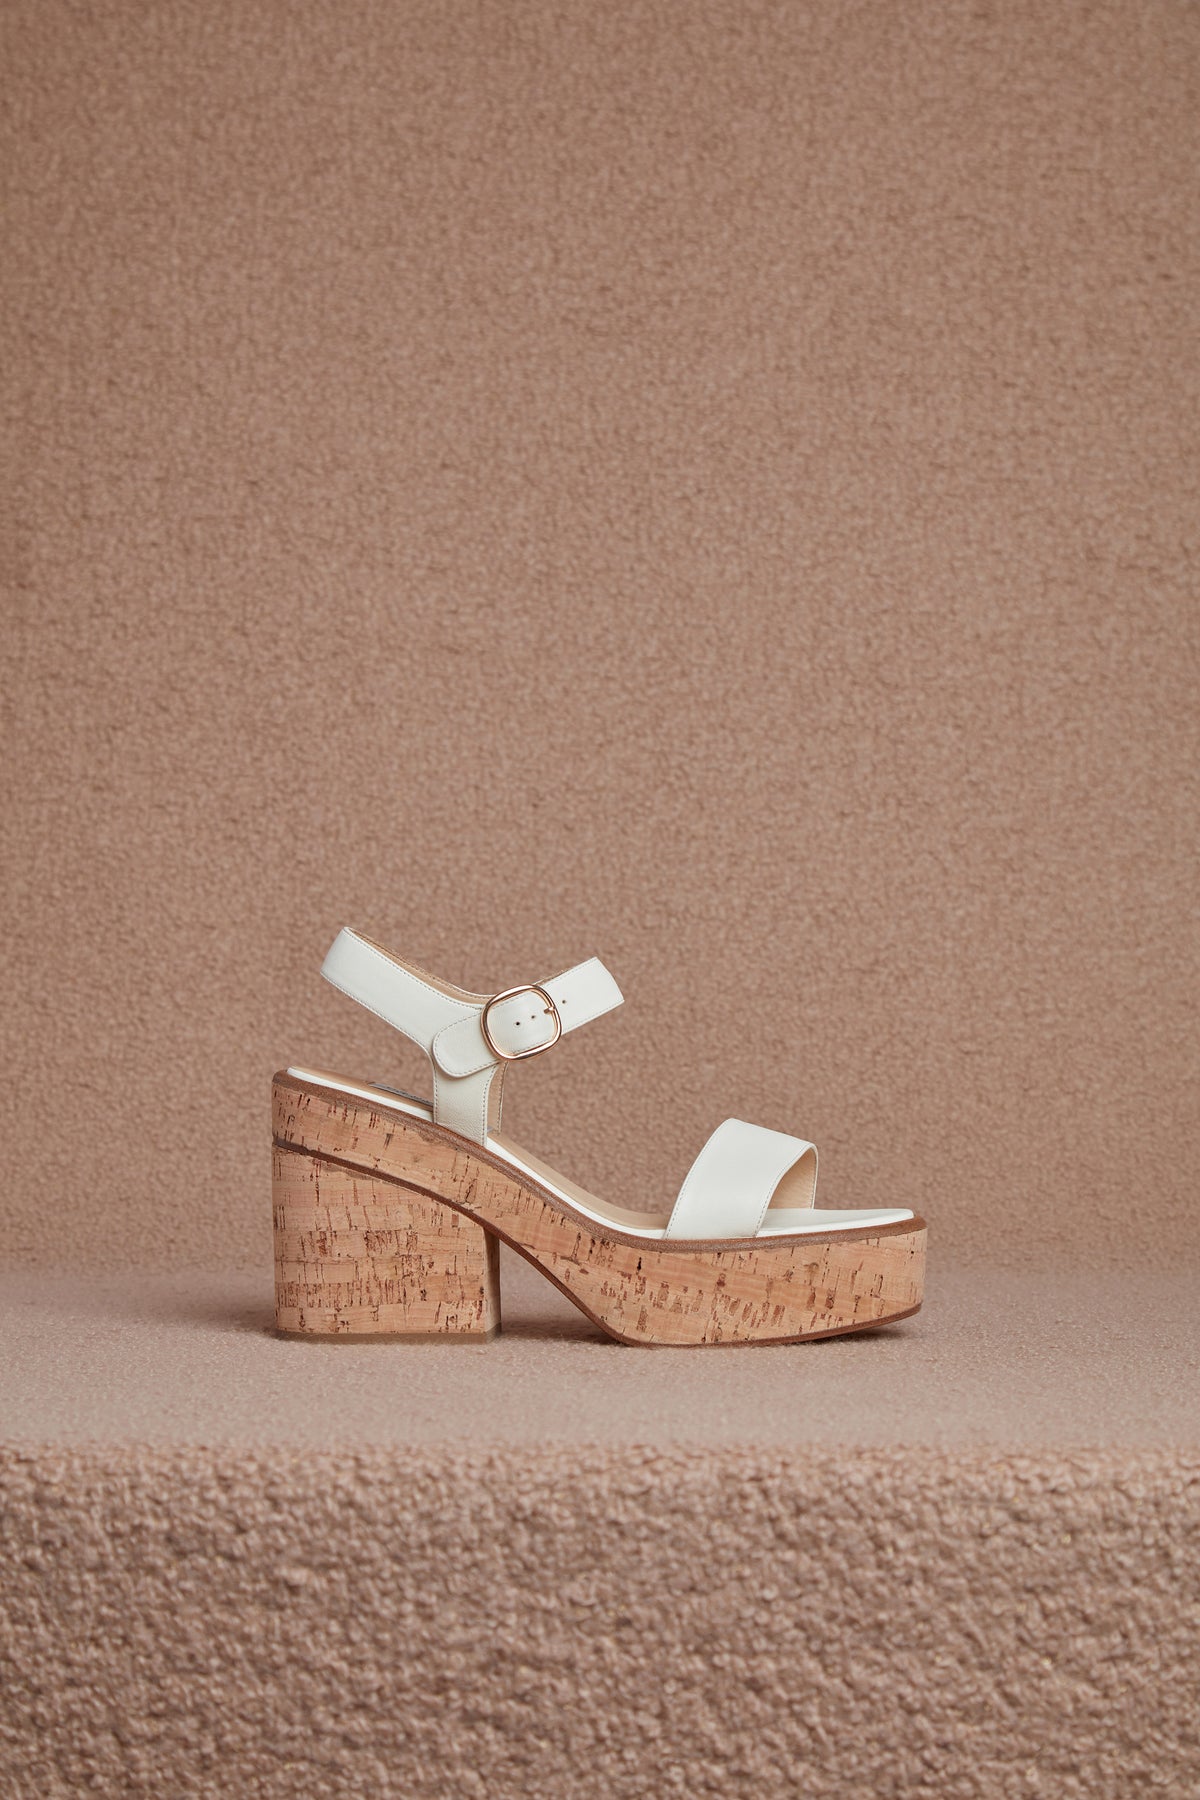 Sardis Platform Sandal in Cream Leather